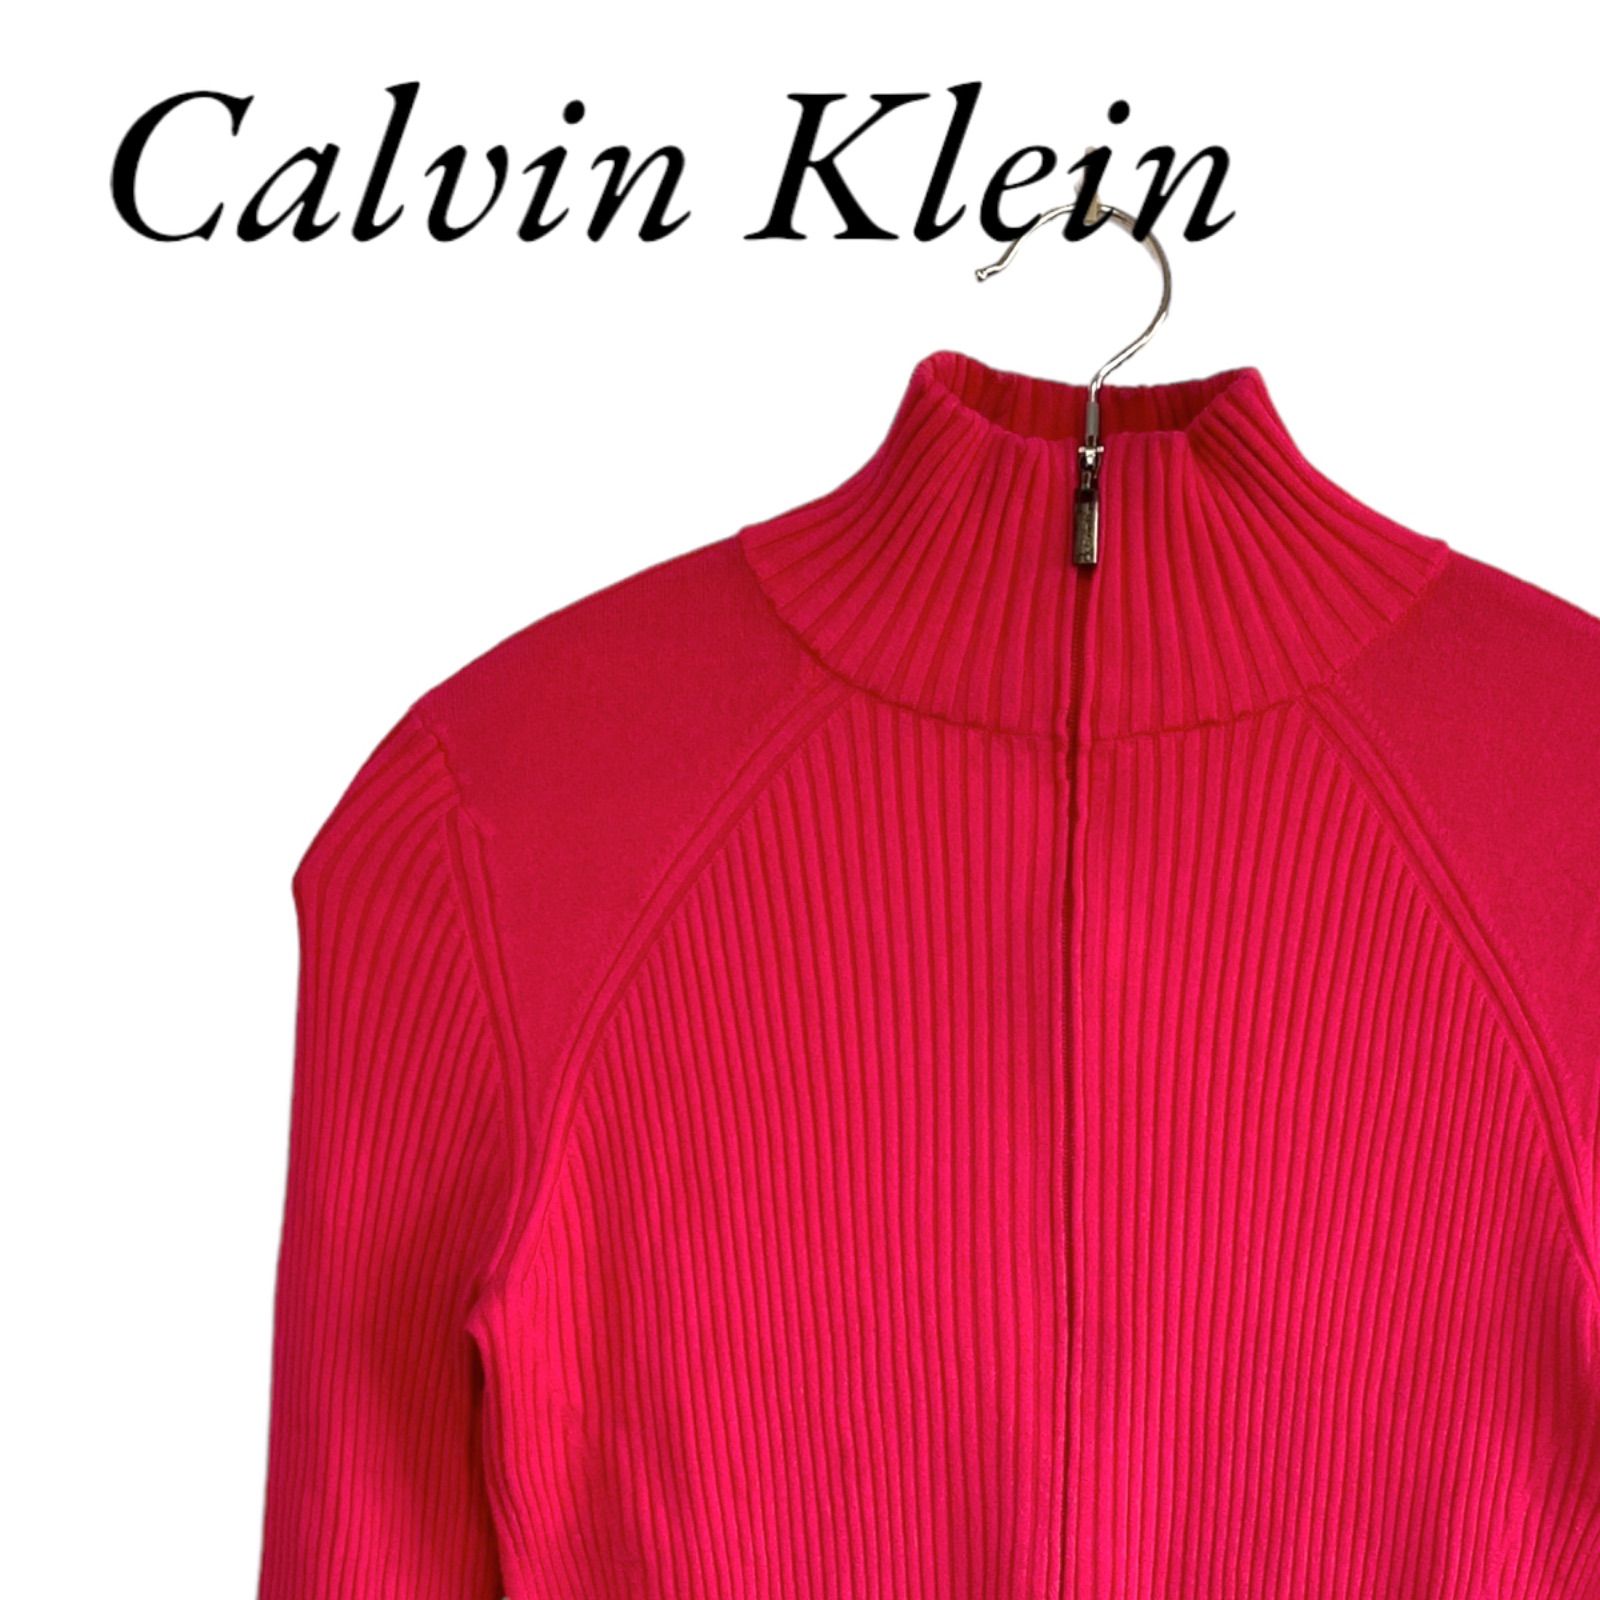 Calvin Klein カルバンクライン 長袖 ジップアップブルゾン ニット 